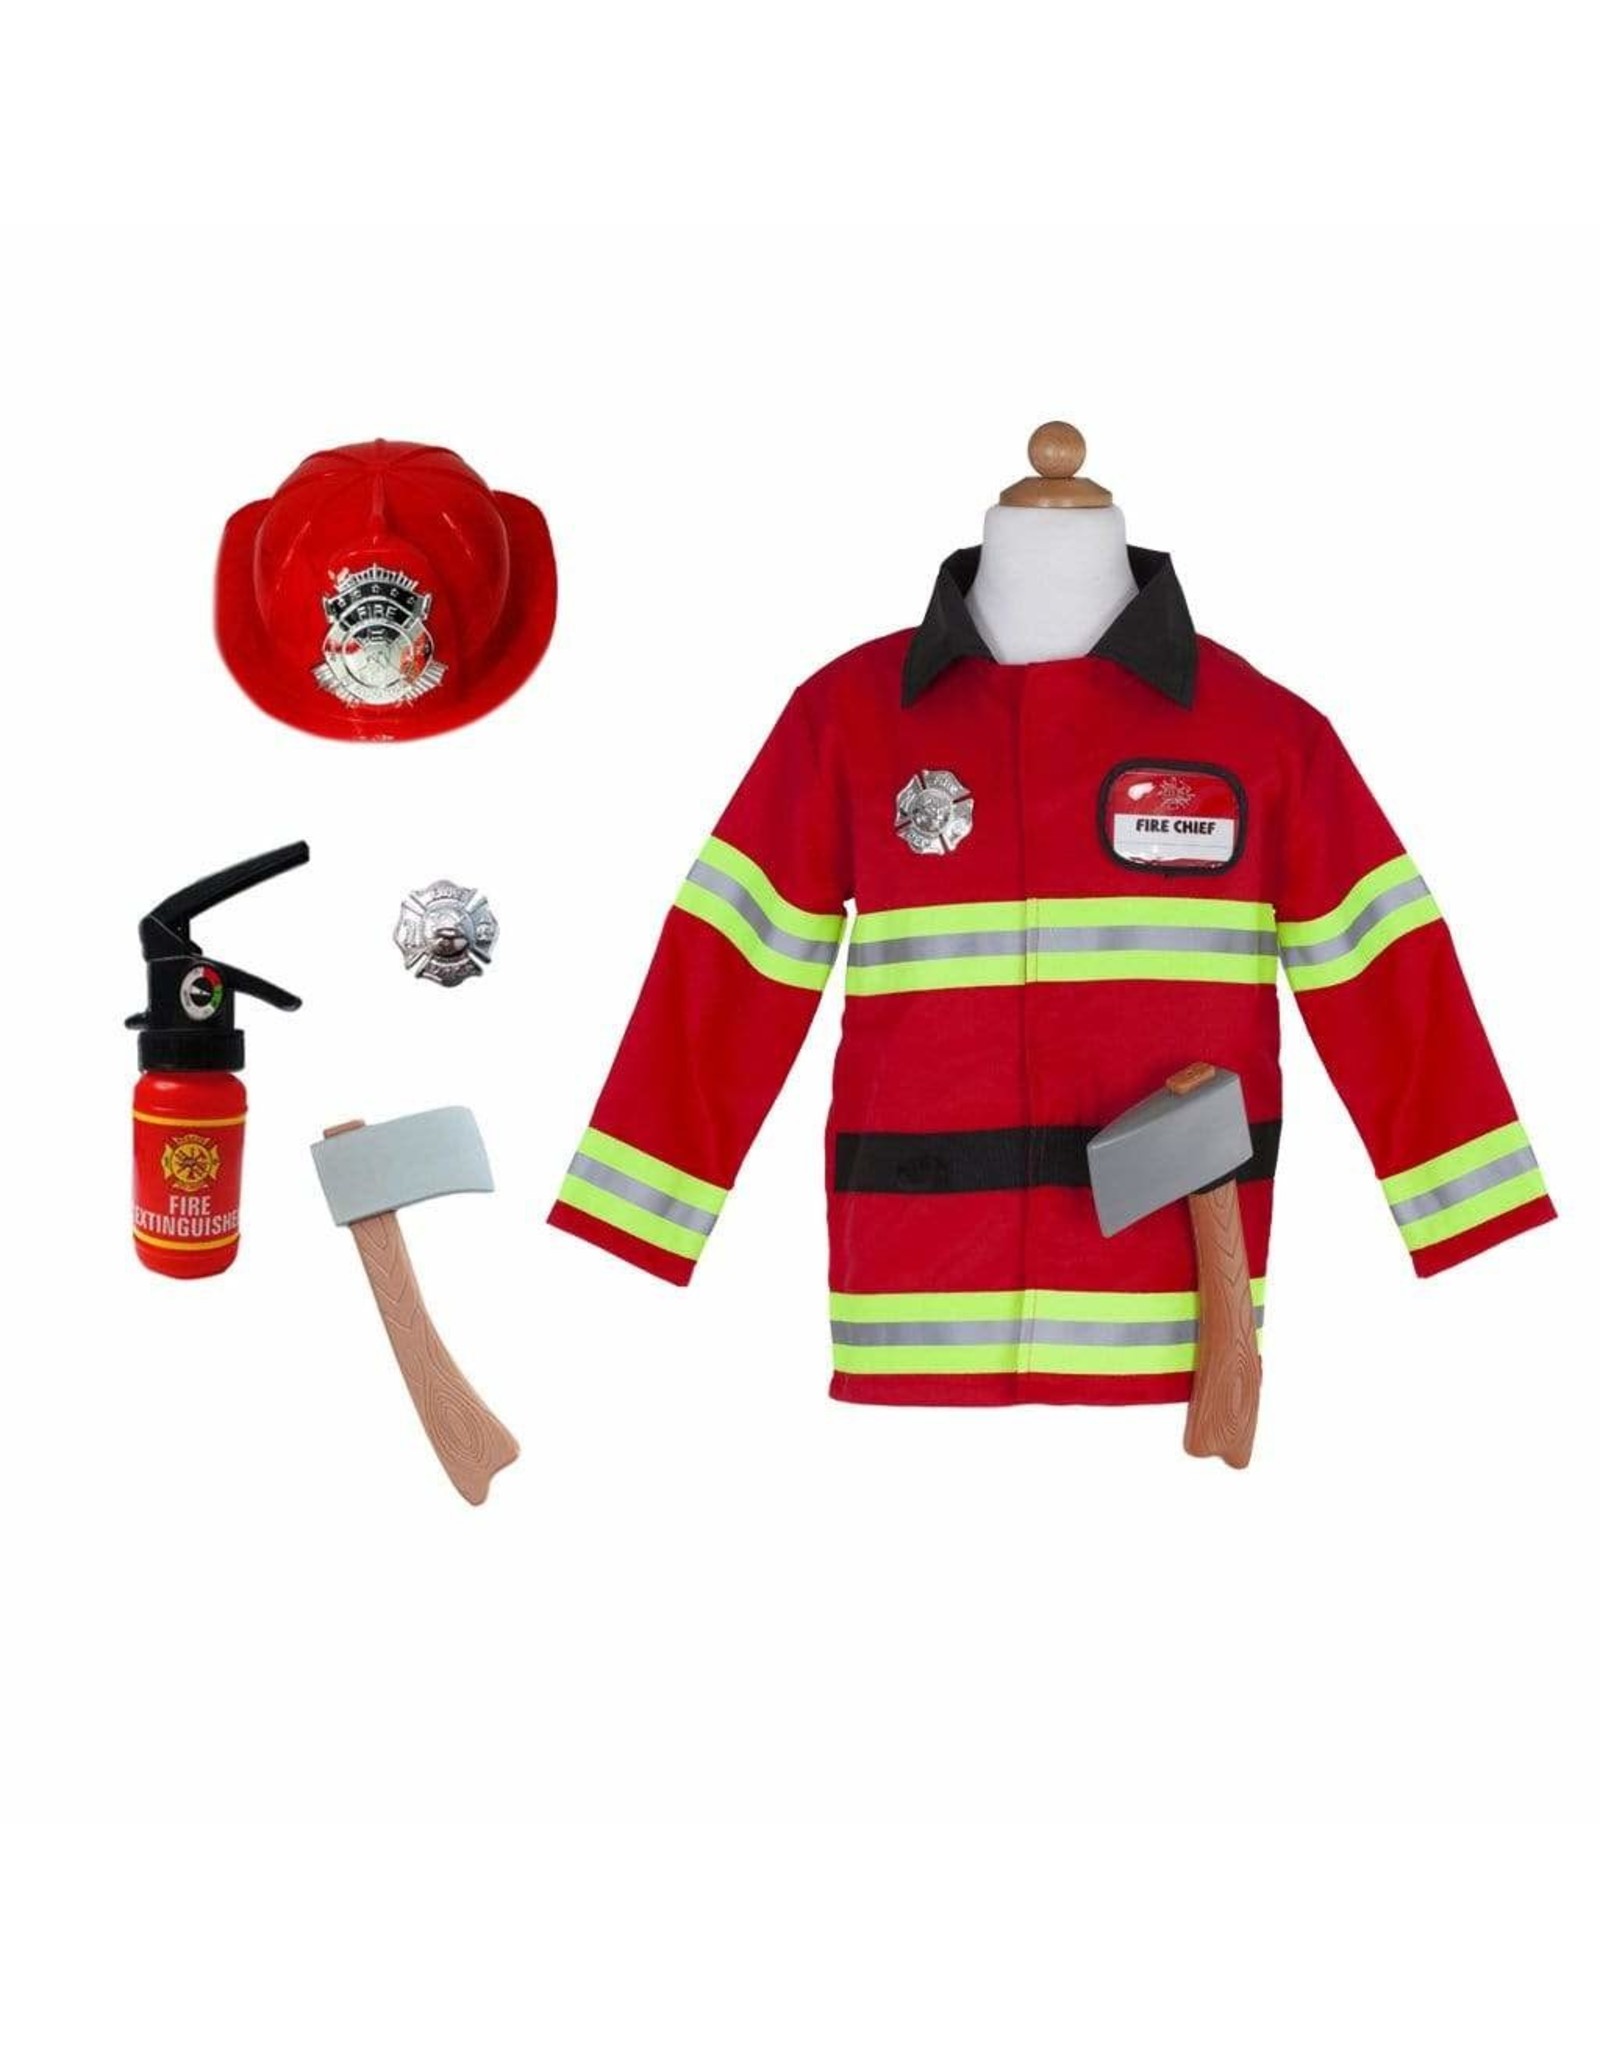 Great Pretenders Fireman Costume, Size 5/6